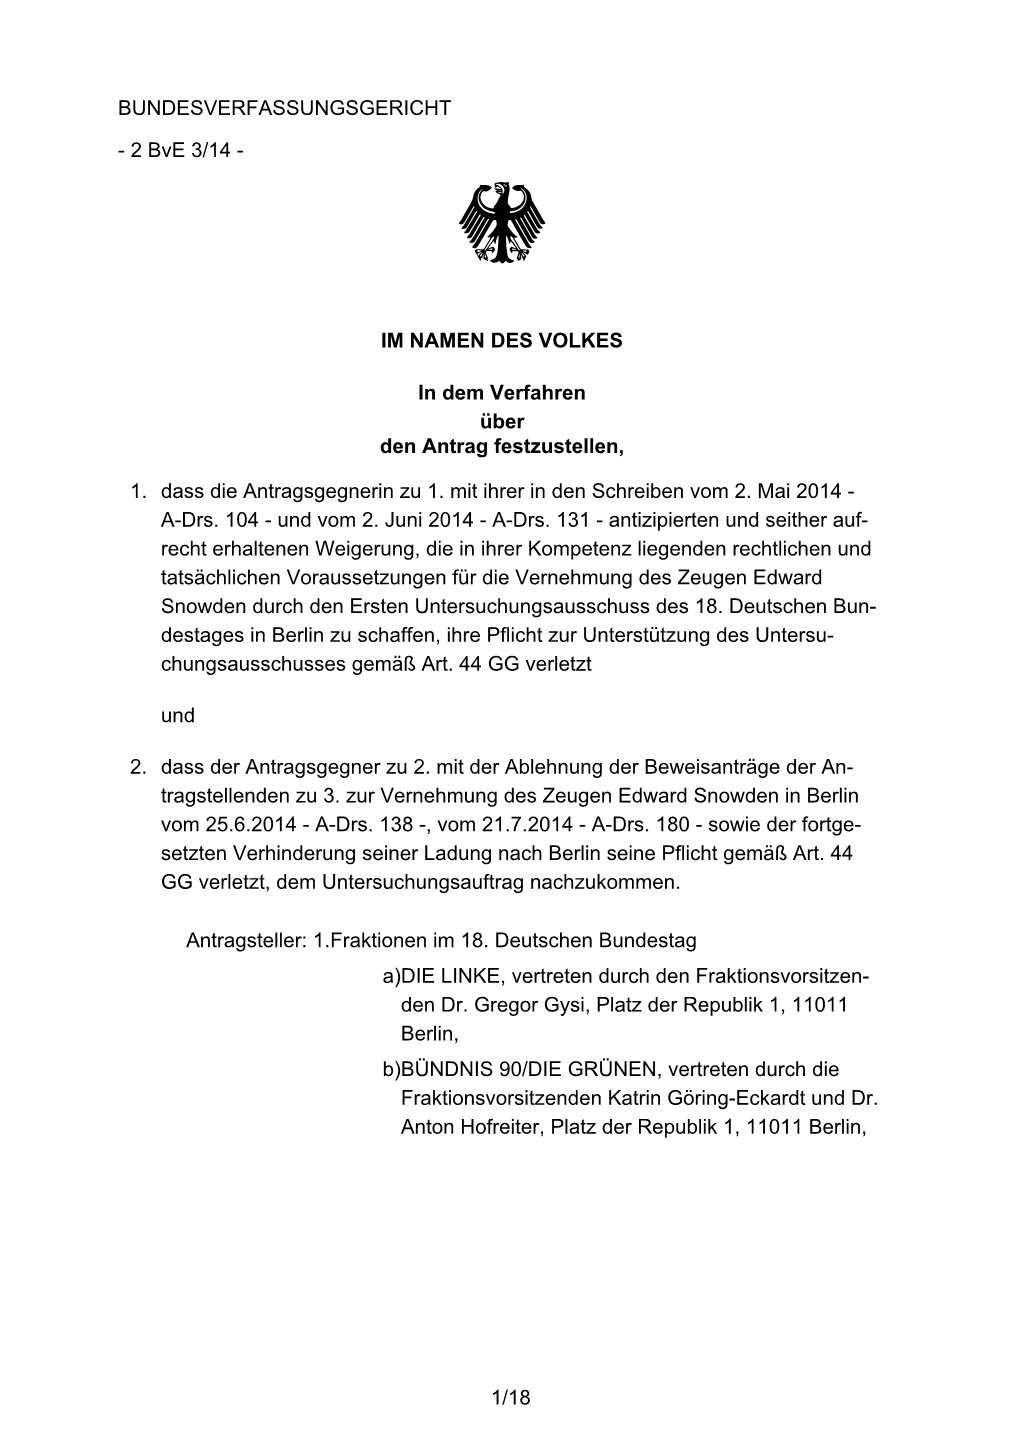 Bverfg, Beschluss Des Zweiten Senats Vom 4. Dezember 2014 - 2 Bve 3/14 - Rn